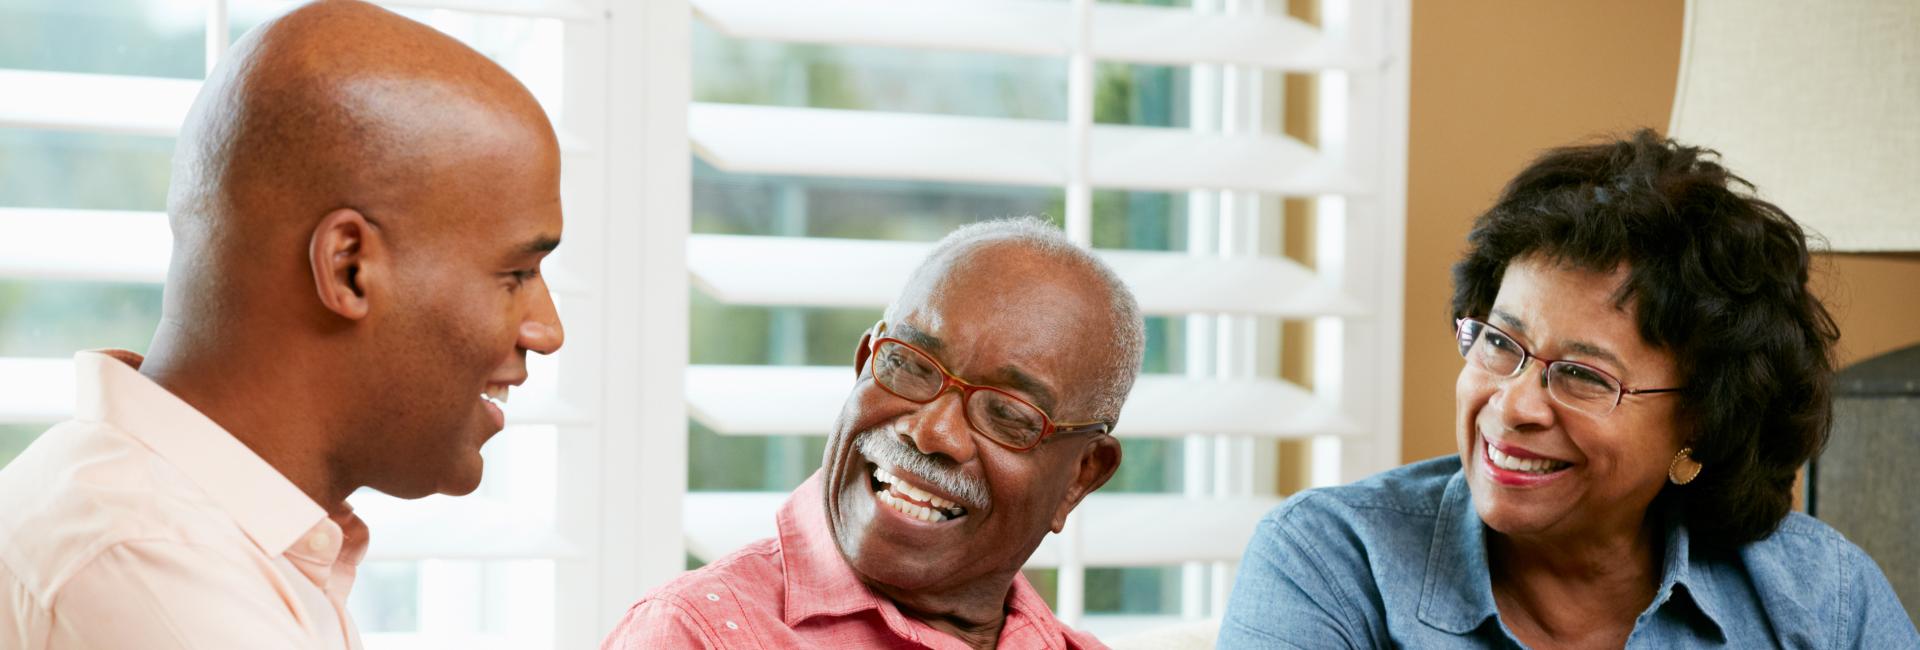 Smiling middle aged black man speaking with smiling older black couple